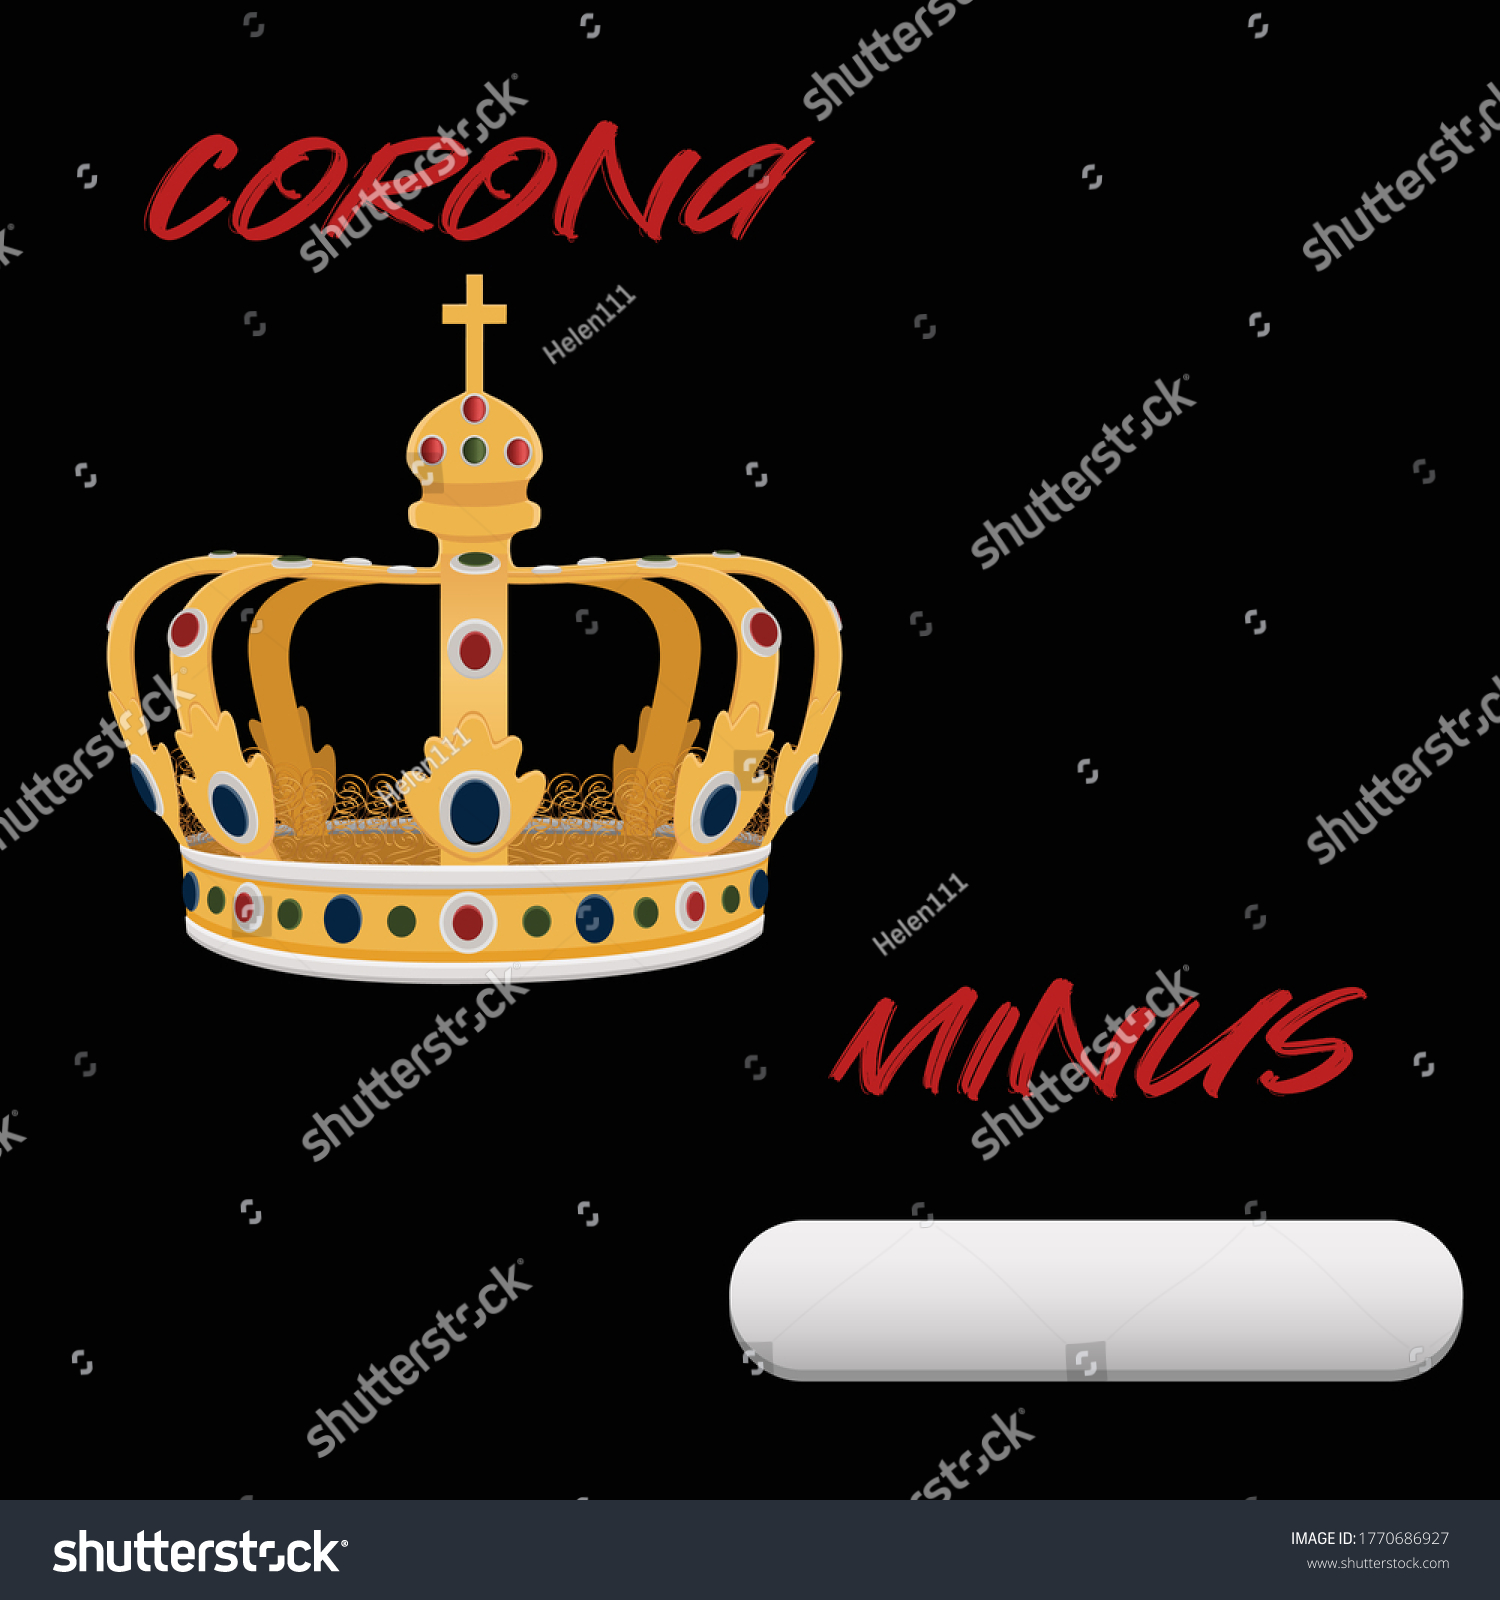 Corona meaning